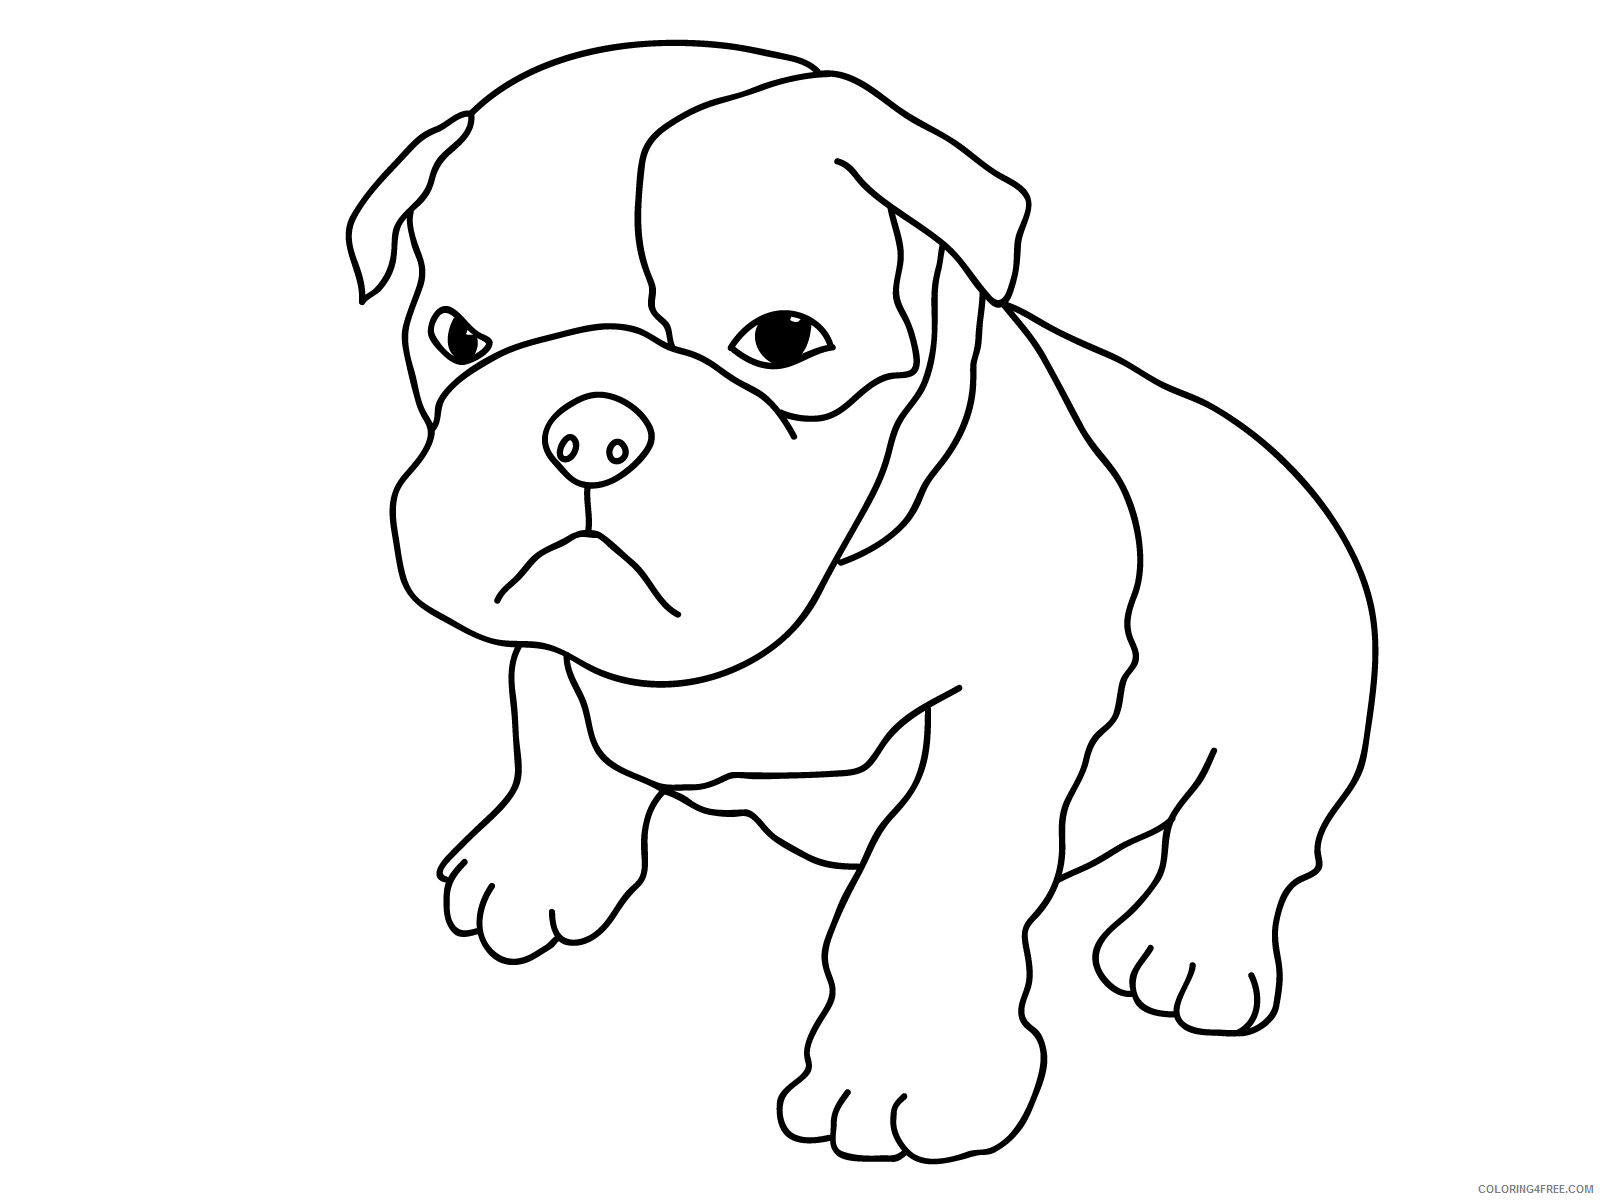 Pitbull Coloring Pages Animal Printable Sheets Pitbull Puppy 2021 3960 Coloring4free